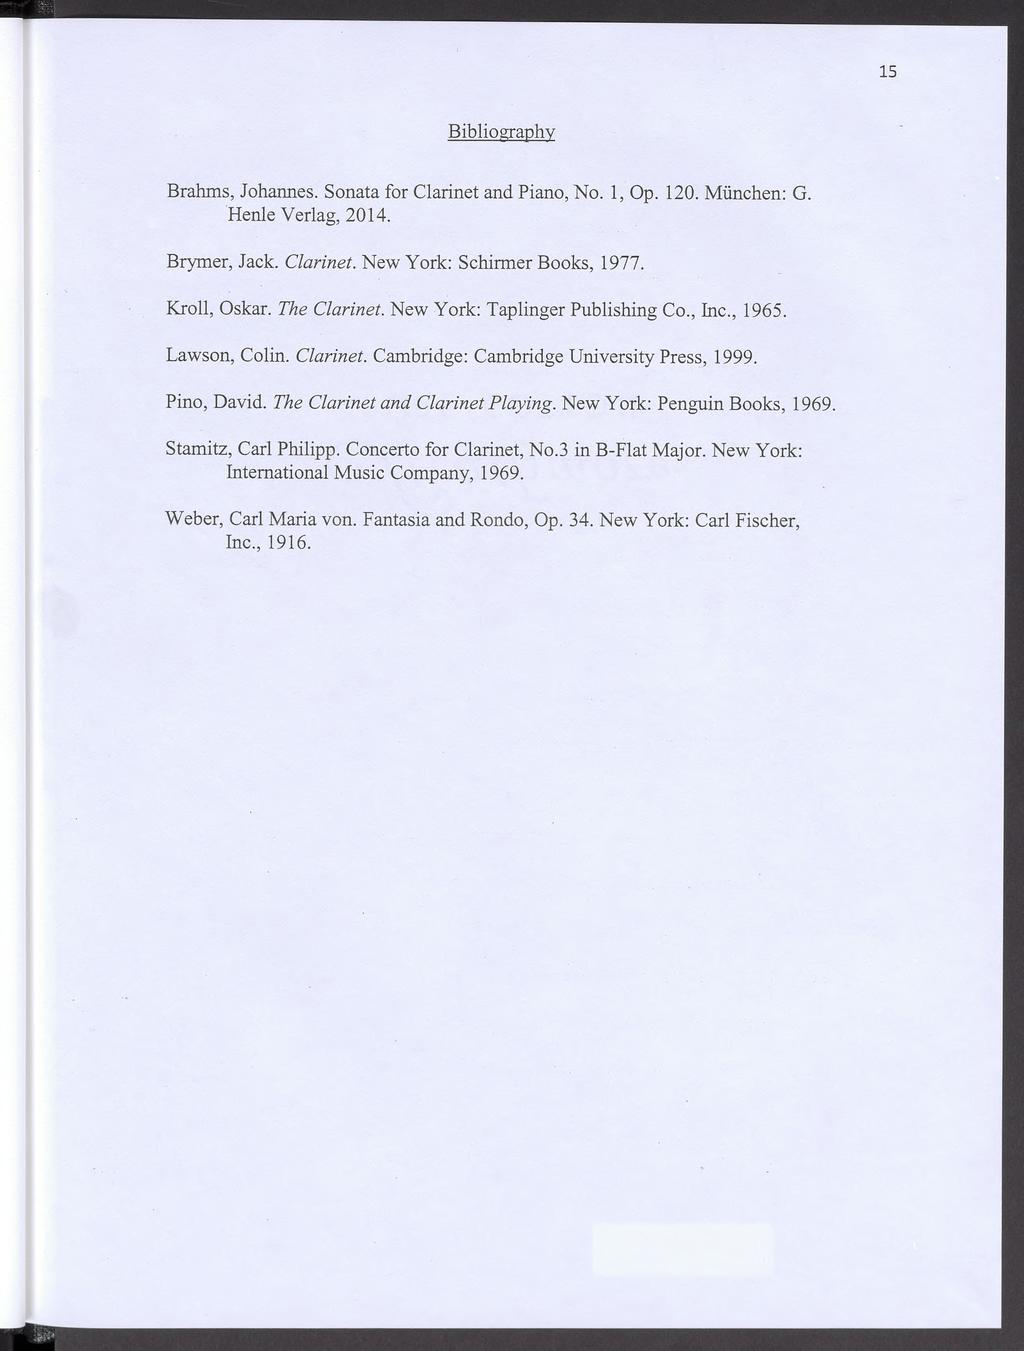 Bibliography Brahms, Johannes. Sonata for Clarinet and Piano, No. 1, Op. 120. Miinchen: G. Henle Verlag, 2014. Brymer, Jack. Clarinet. New York: Schirmer Books, 1977. Kroll, Oskar. The Clarinet.